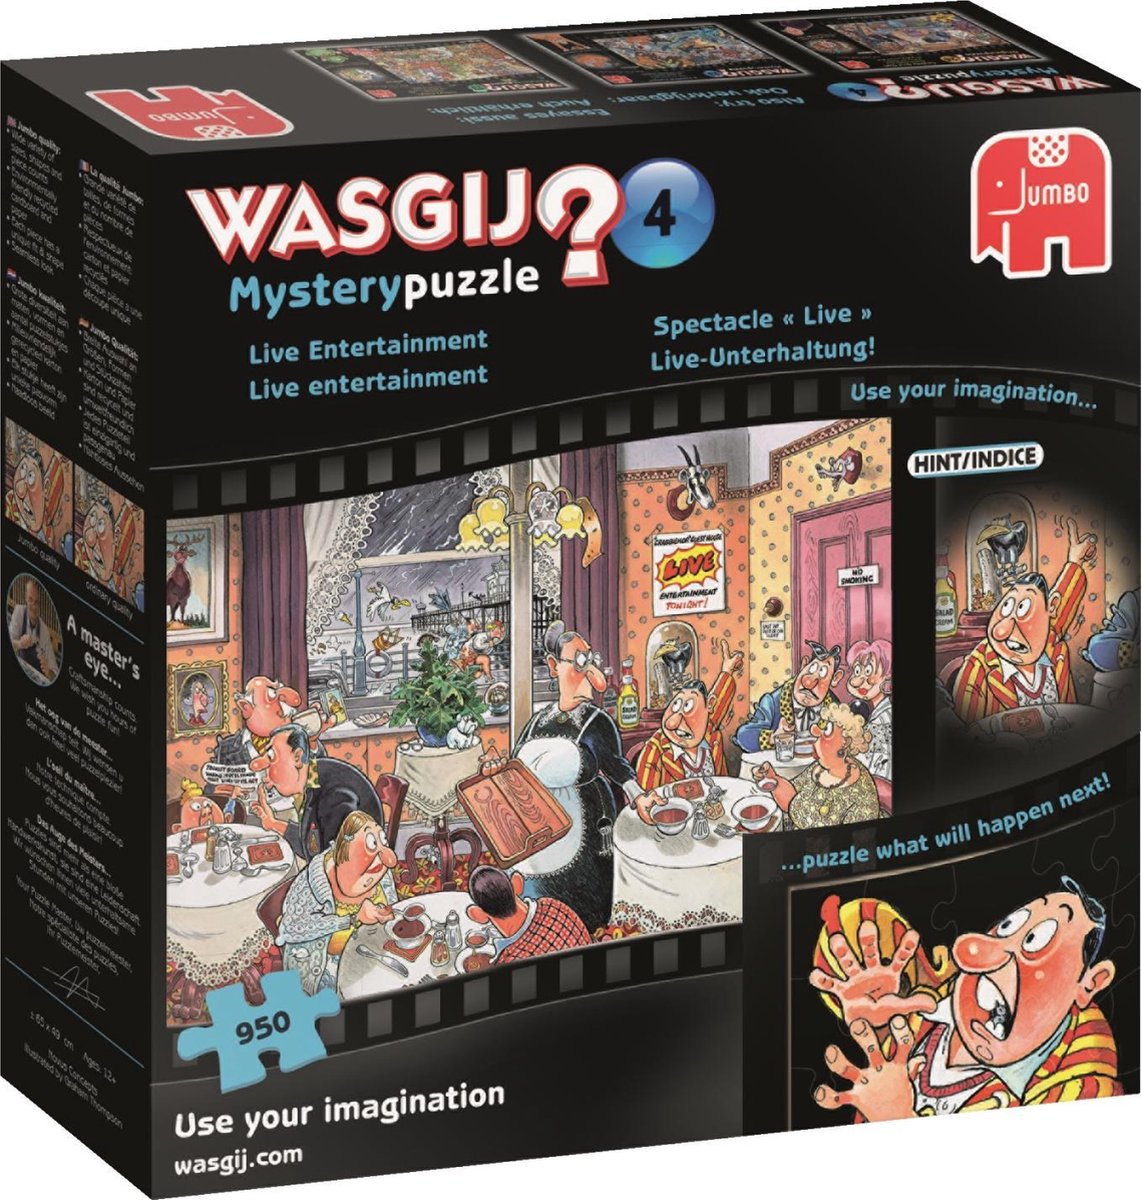 Wasgij Mystery 4 Live Entertainment puzzel - 950 Stukjes